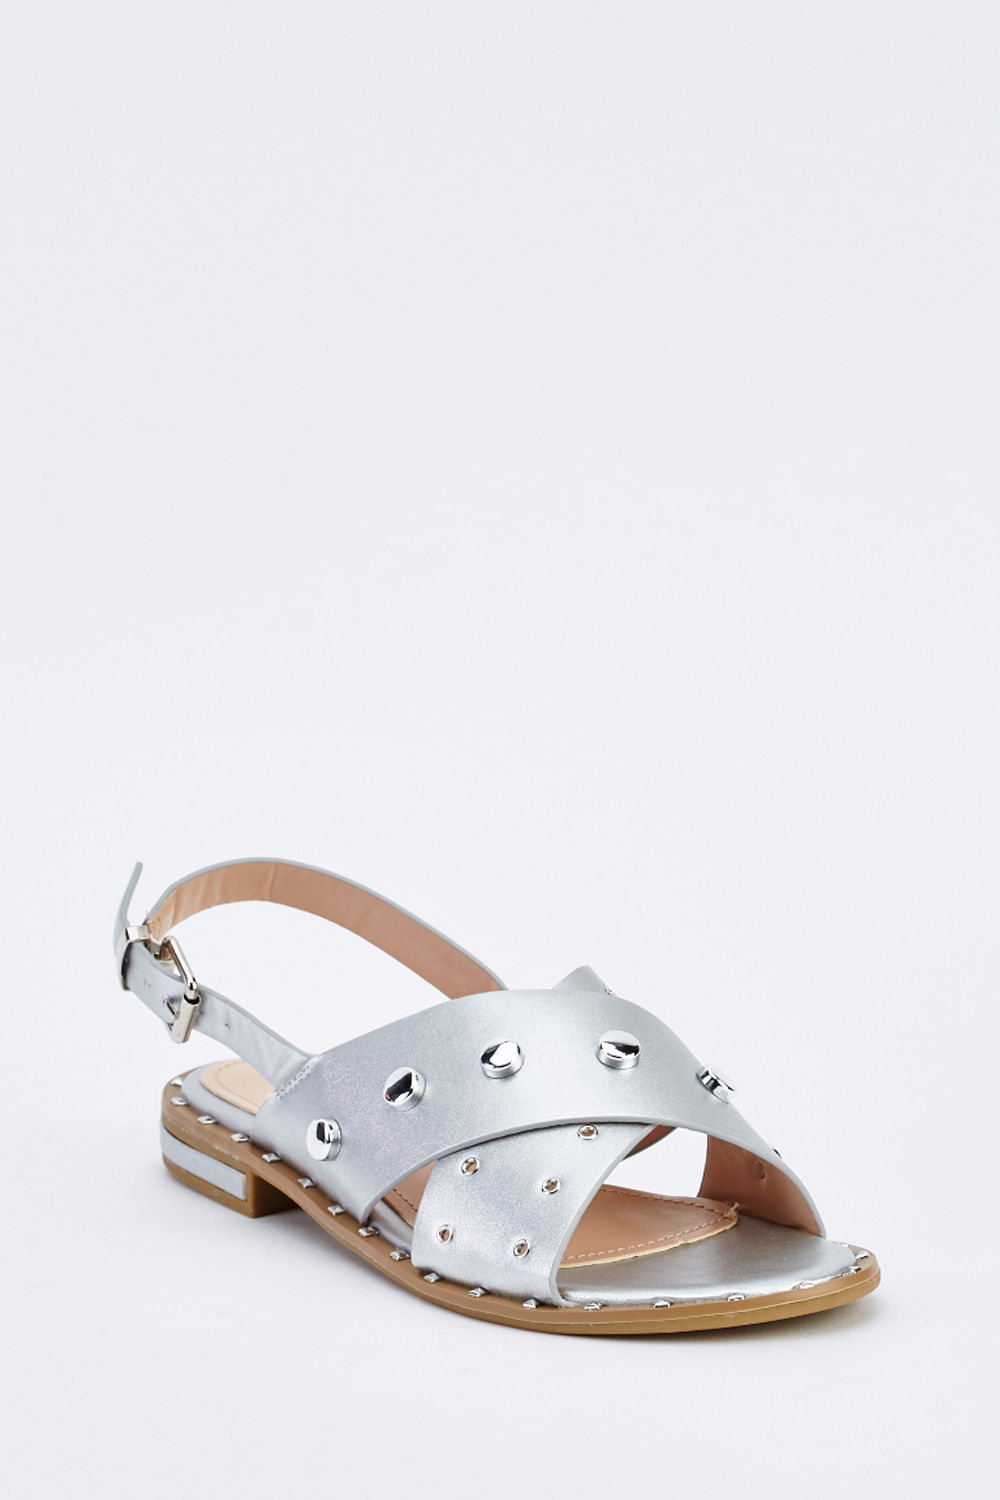 Metallic Studded Flat Sandals - Just $6